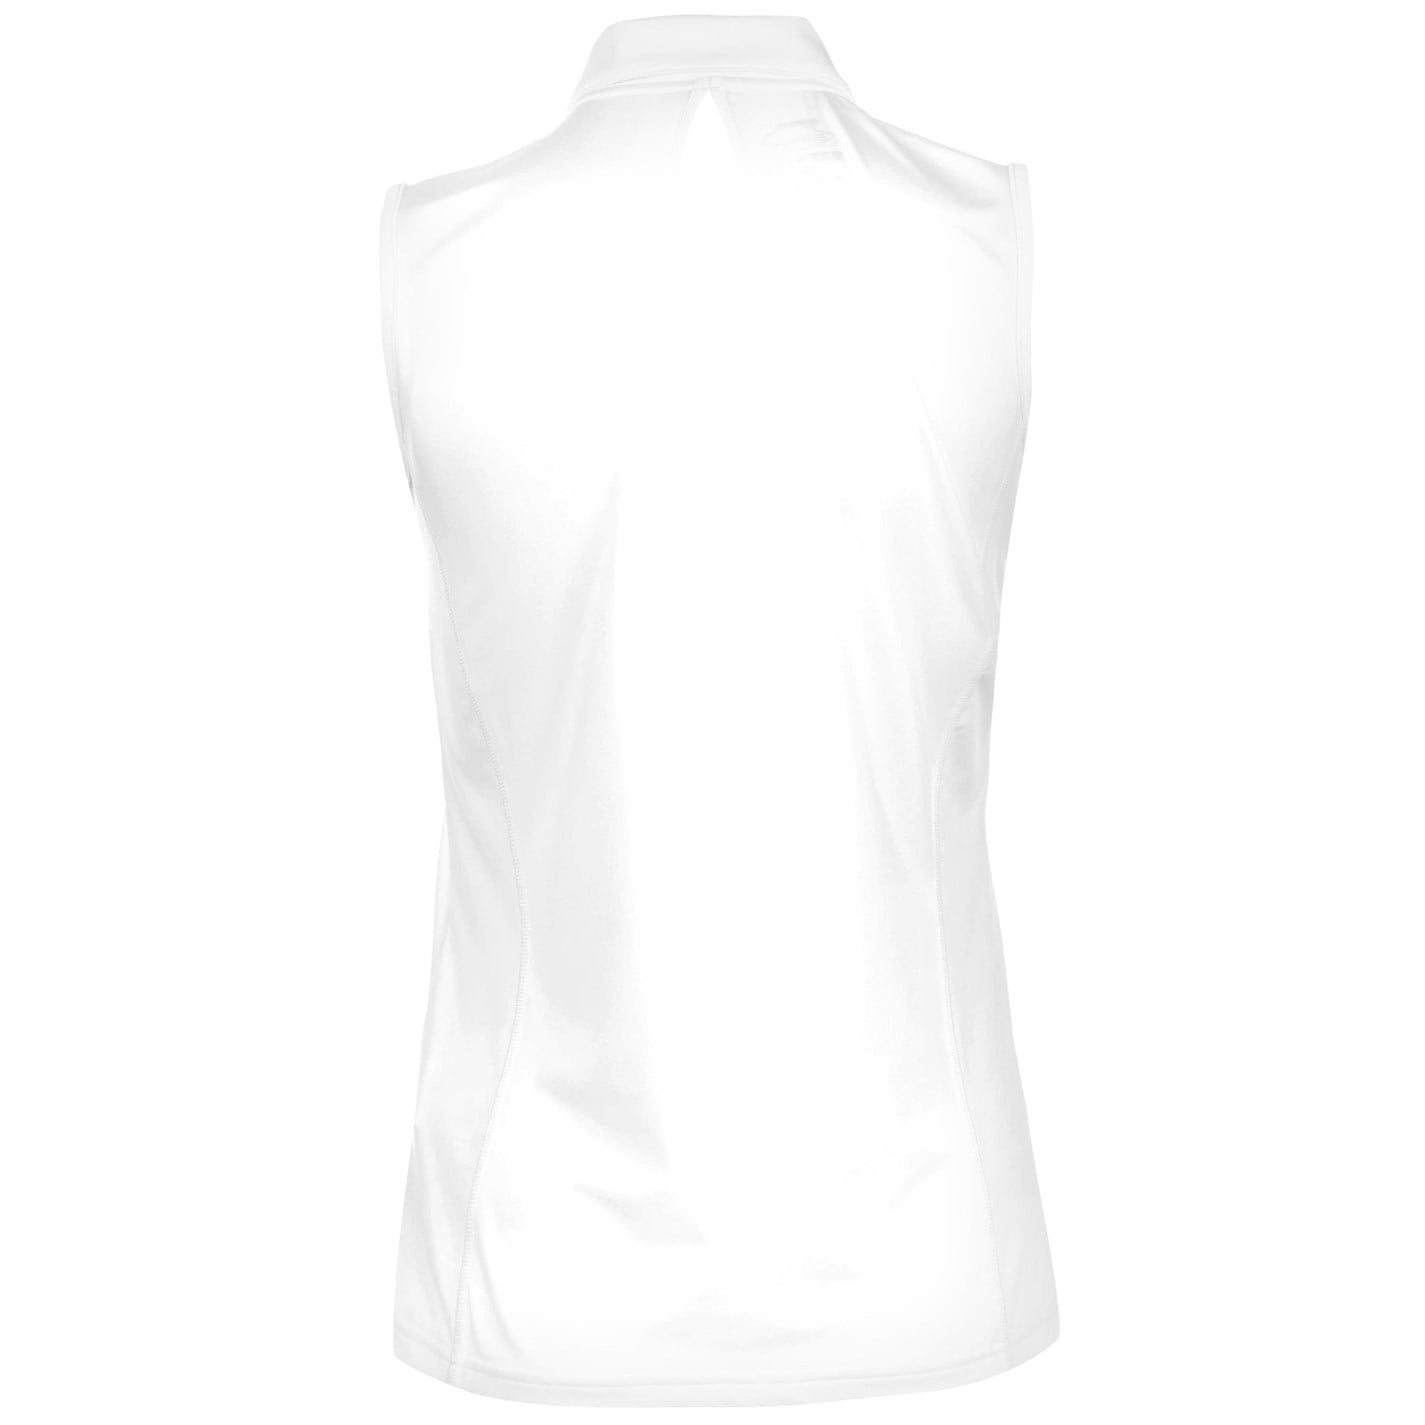 Tricouri Polo Slazenger Sleeveless pentru Femei